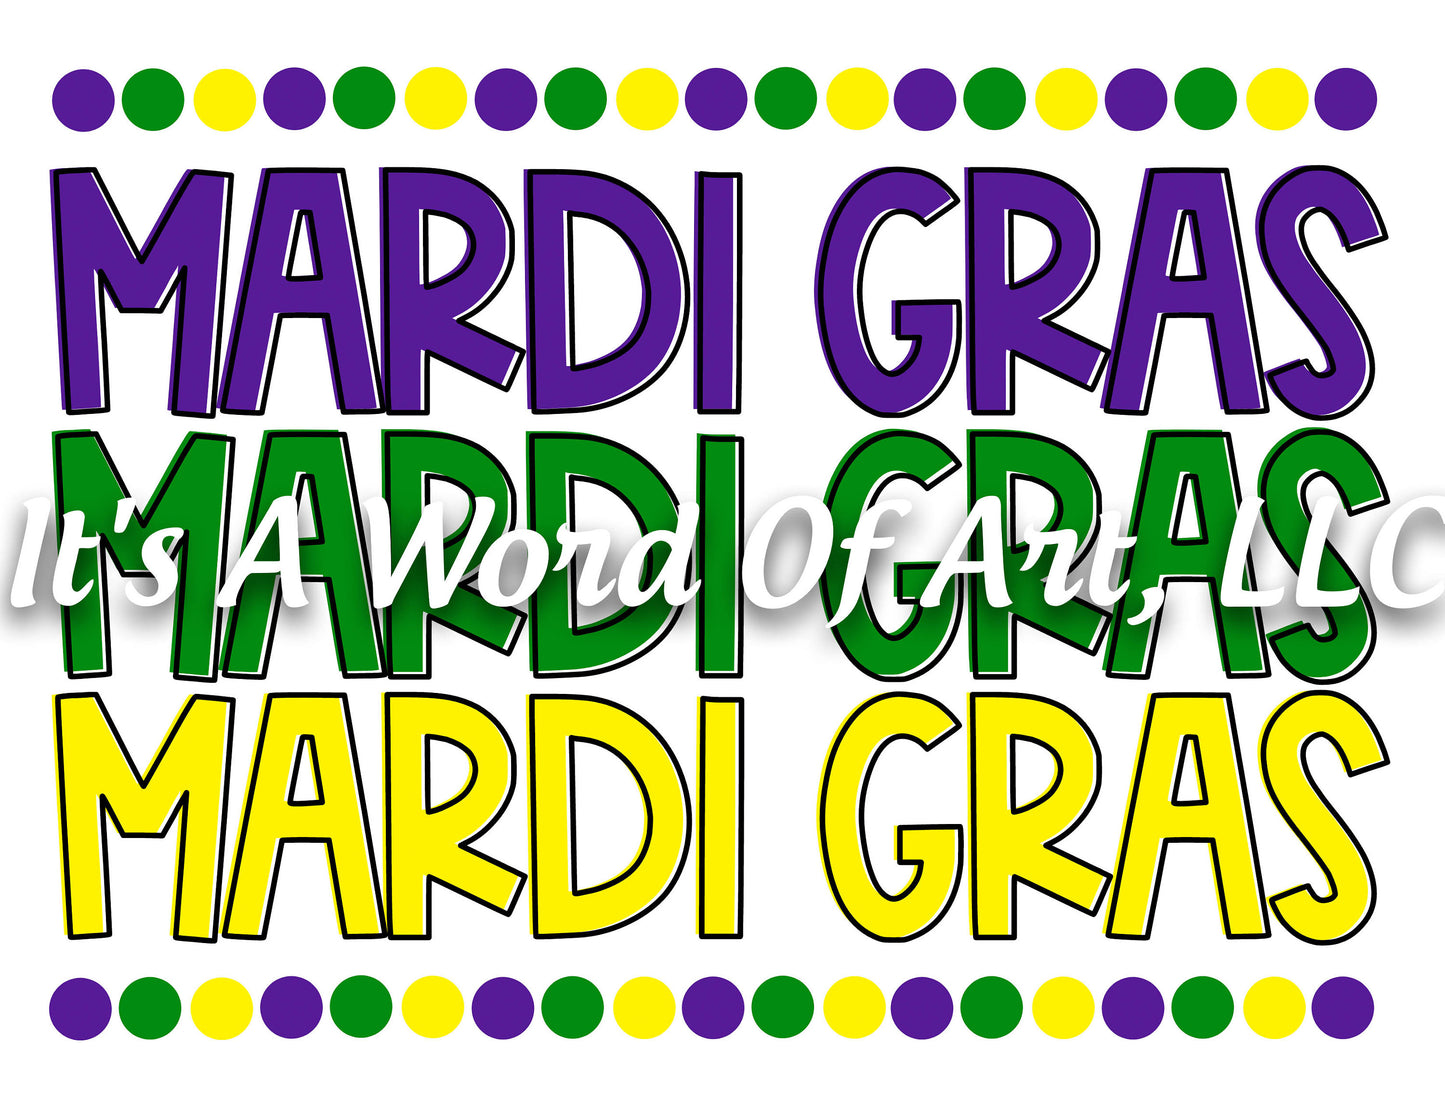 Mardi Gras 4 - Mardi Gras Mardi Gras Mardi Gras Colors - Sublimation Transfer Set/Ready To Press Sublimation Transfer/Sublimation Transfer